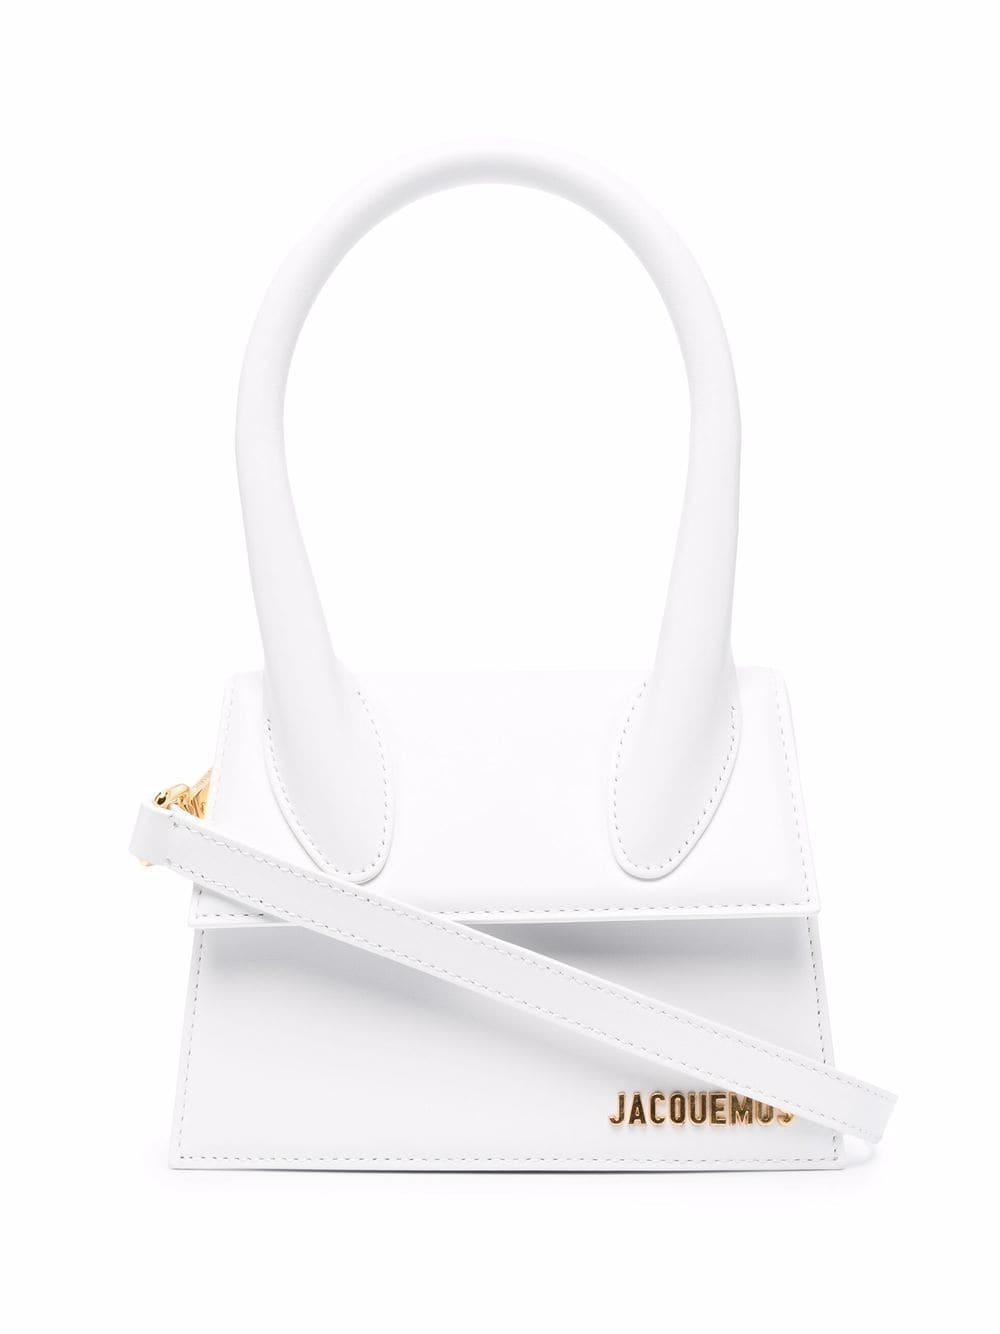 Jacquemus Le Chiquito Moyen Shoulder Bag In White